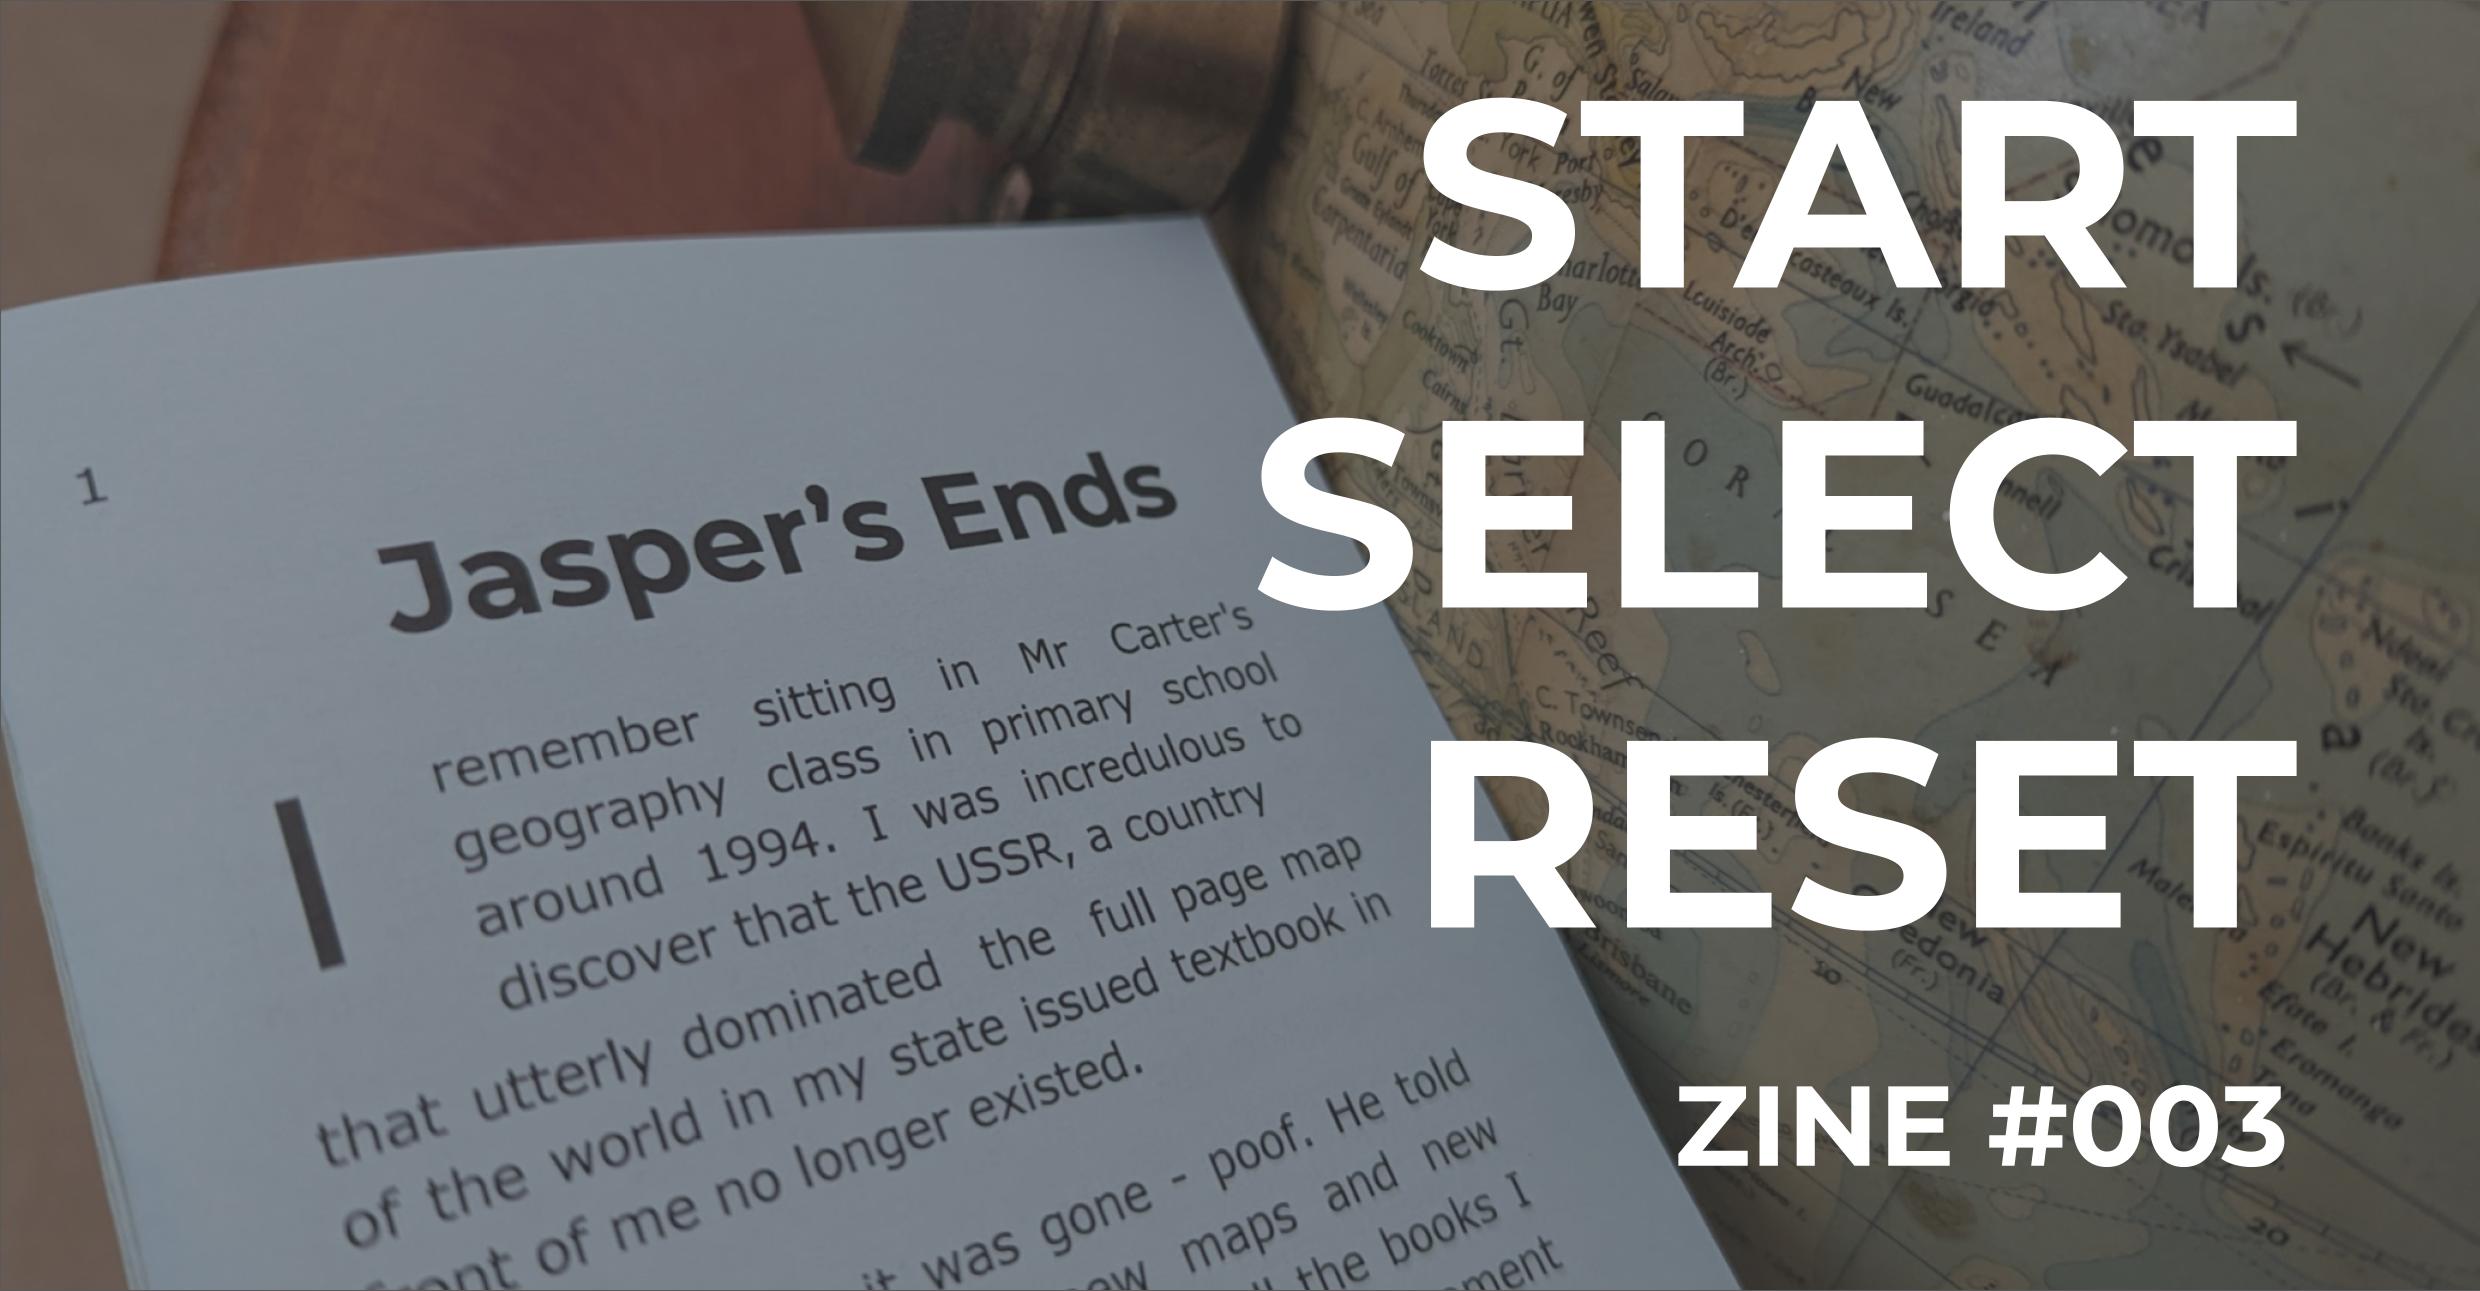 Start Select Reset Zine – Jasper’s Ends 